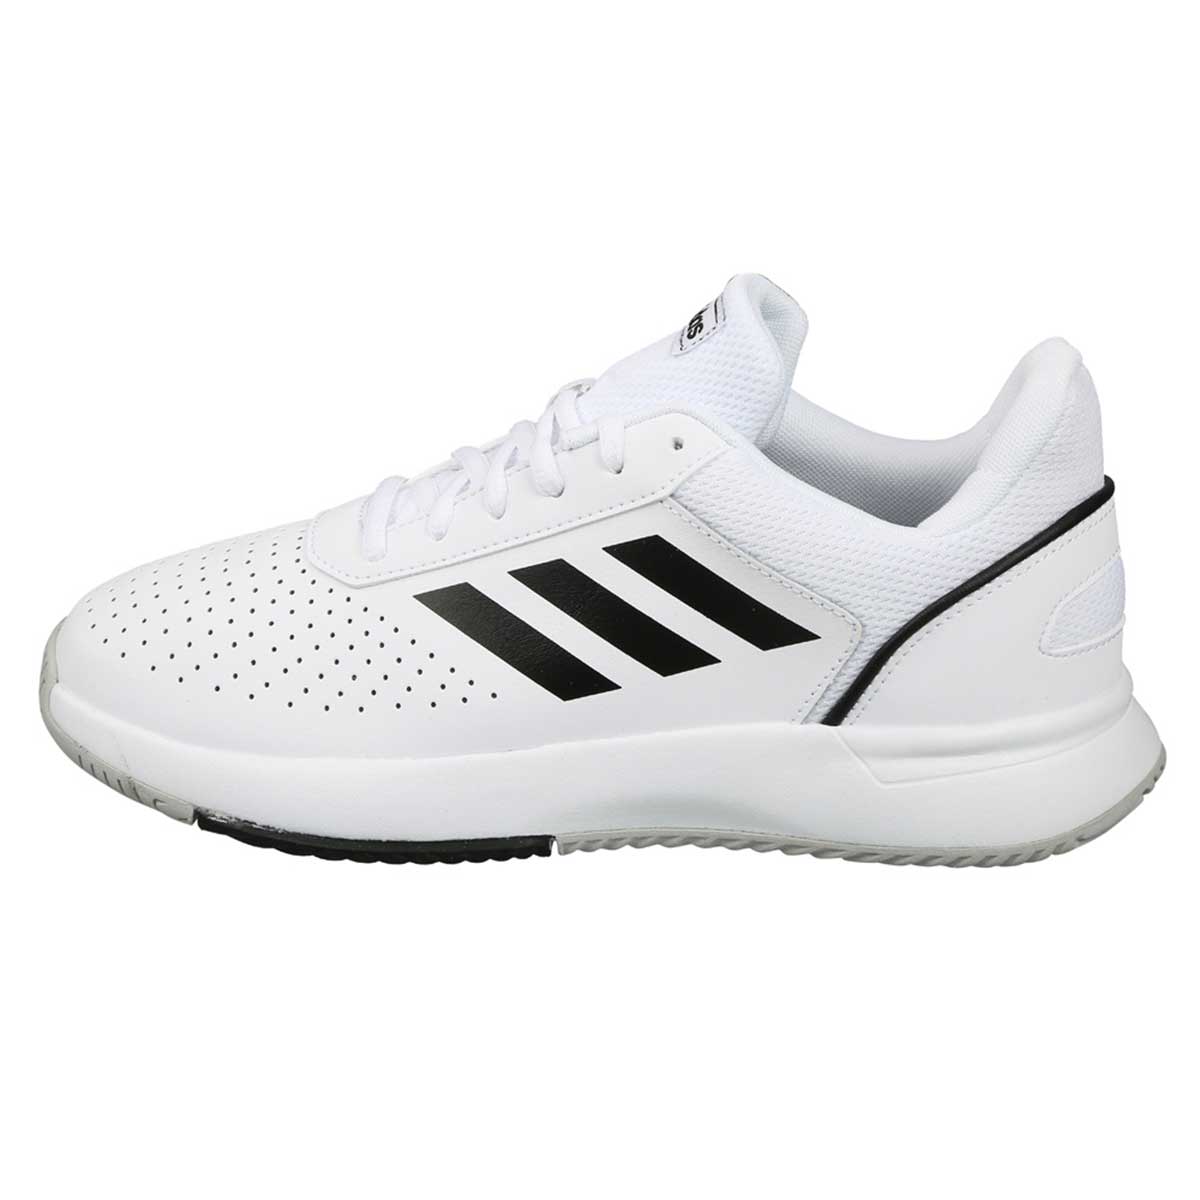 Adidas CourtSmash Tennis Shoes (White/Black/Grey) Online India